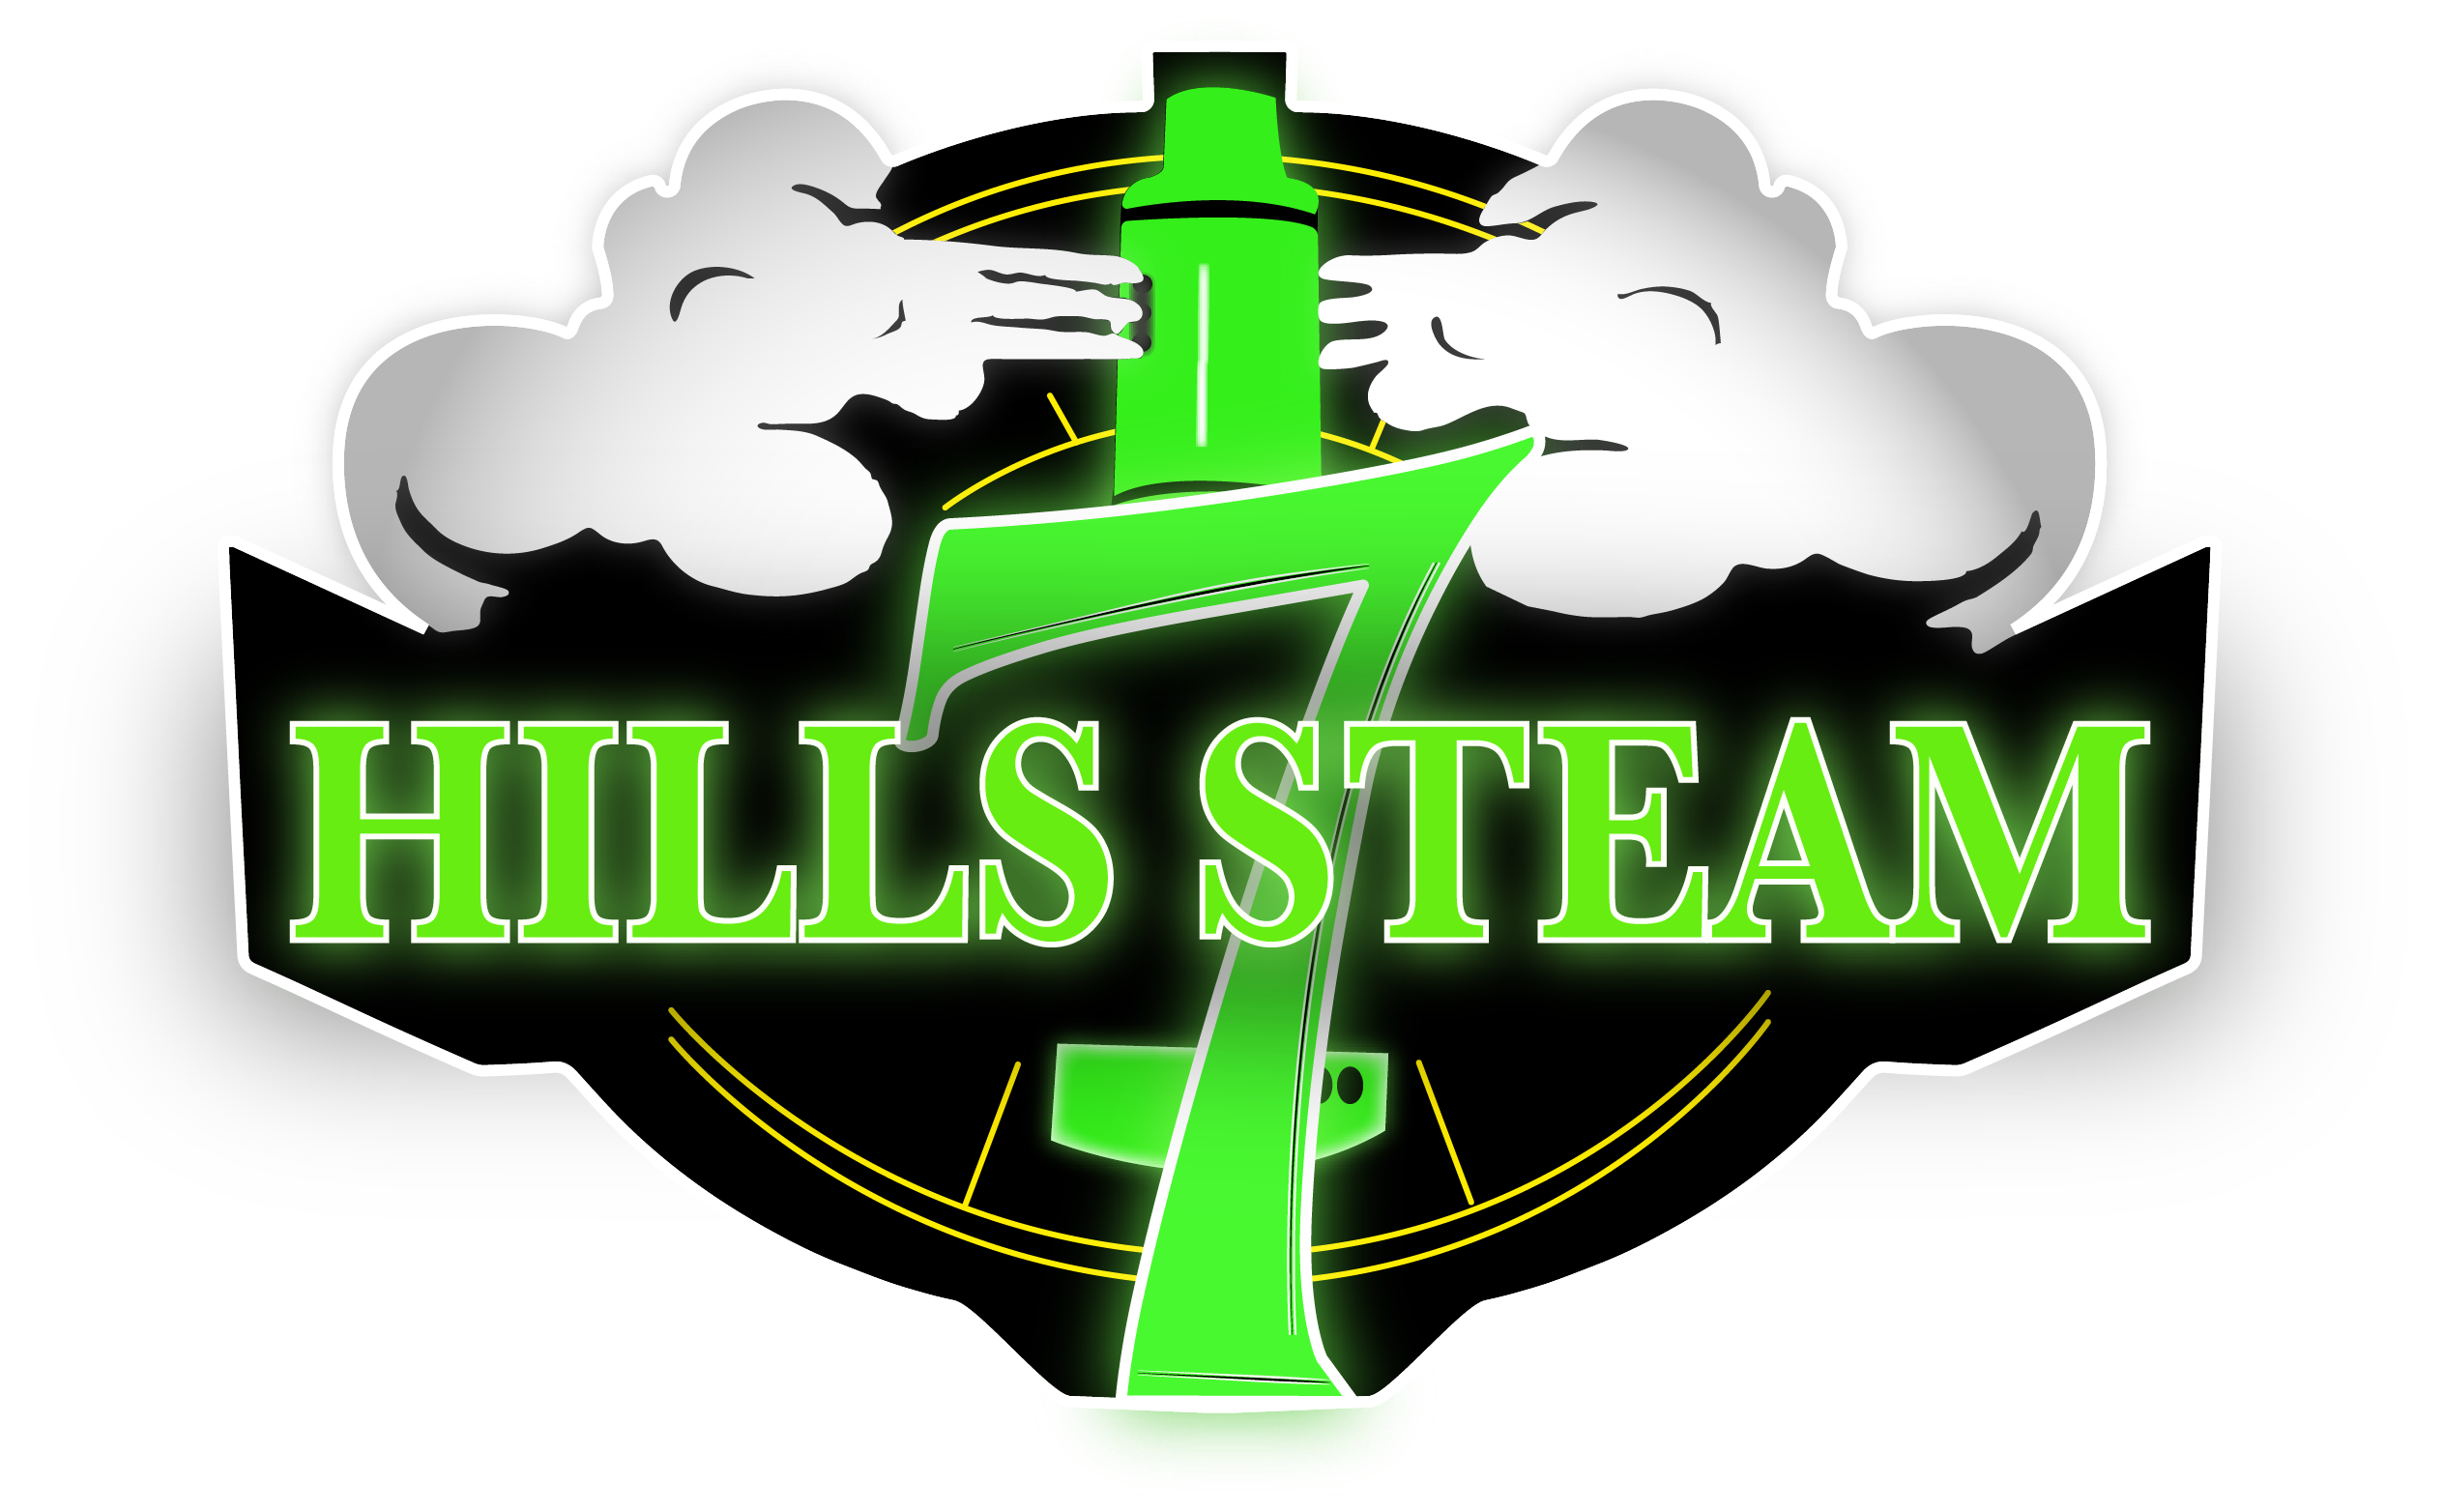 Seven Hills Steam